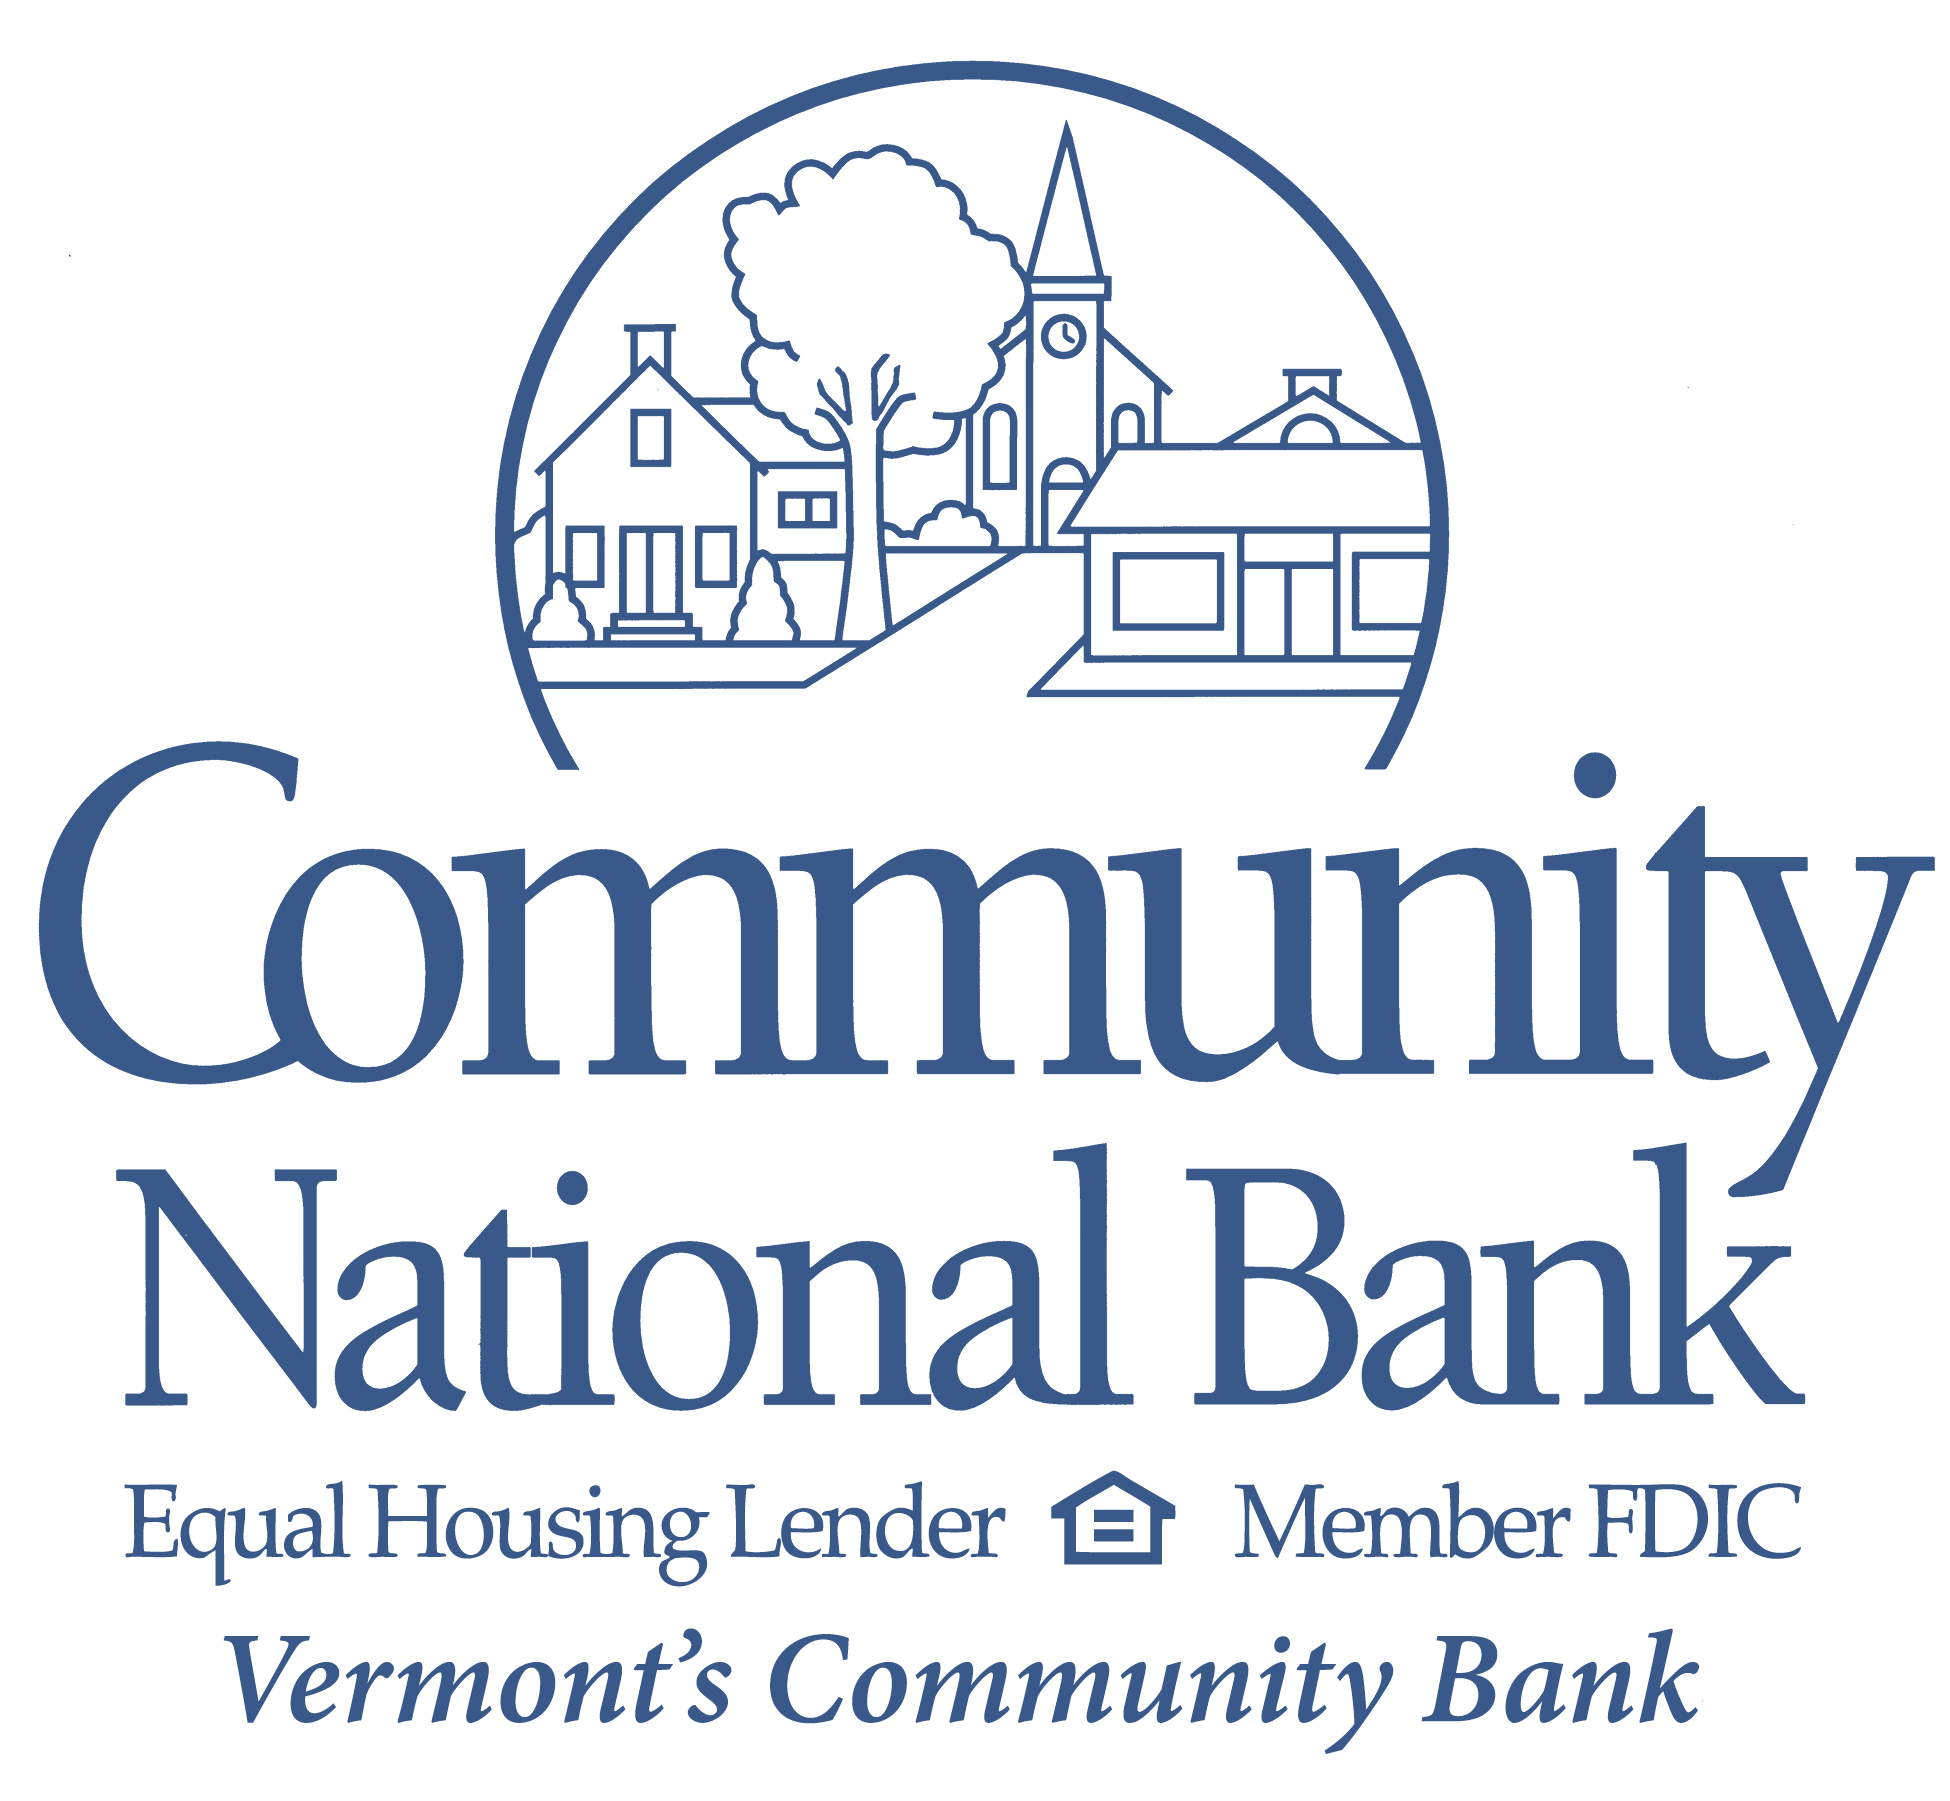 Community National Bank logo in blue